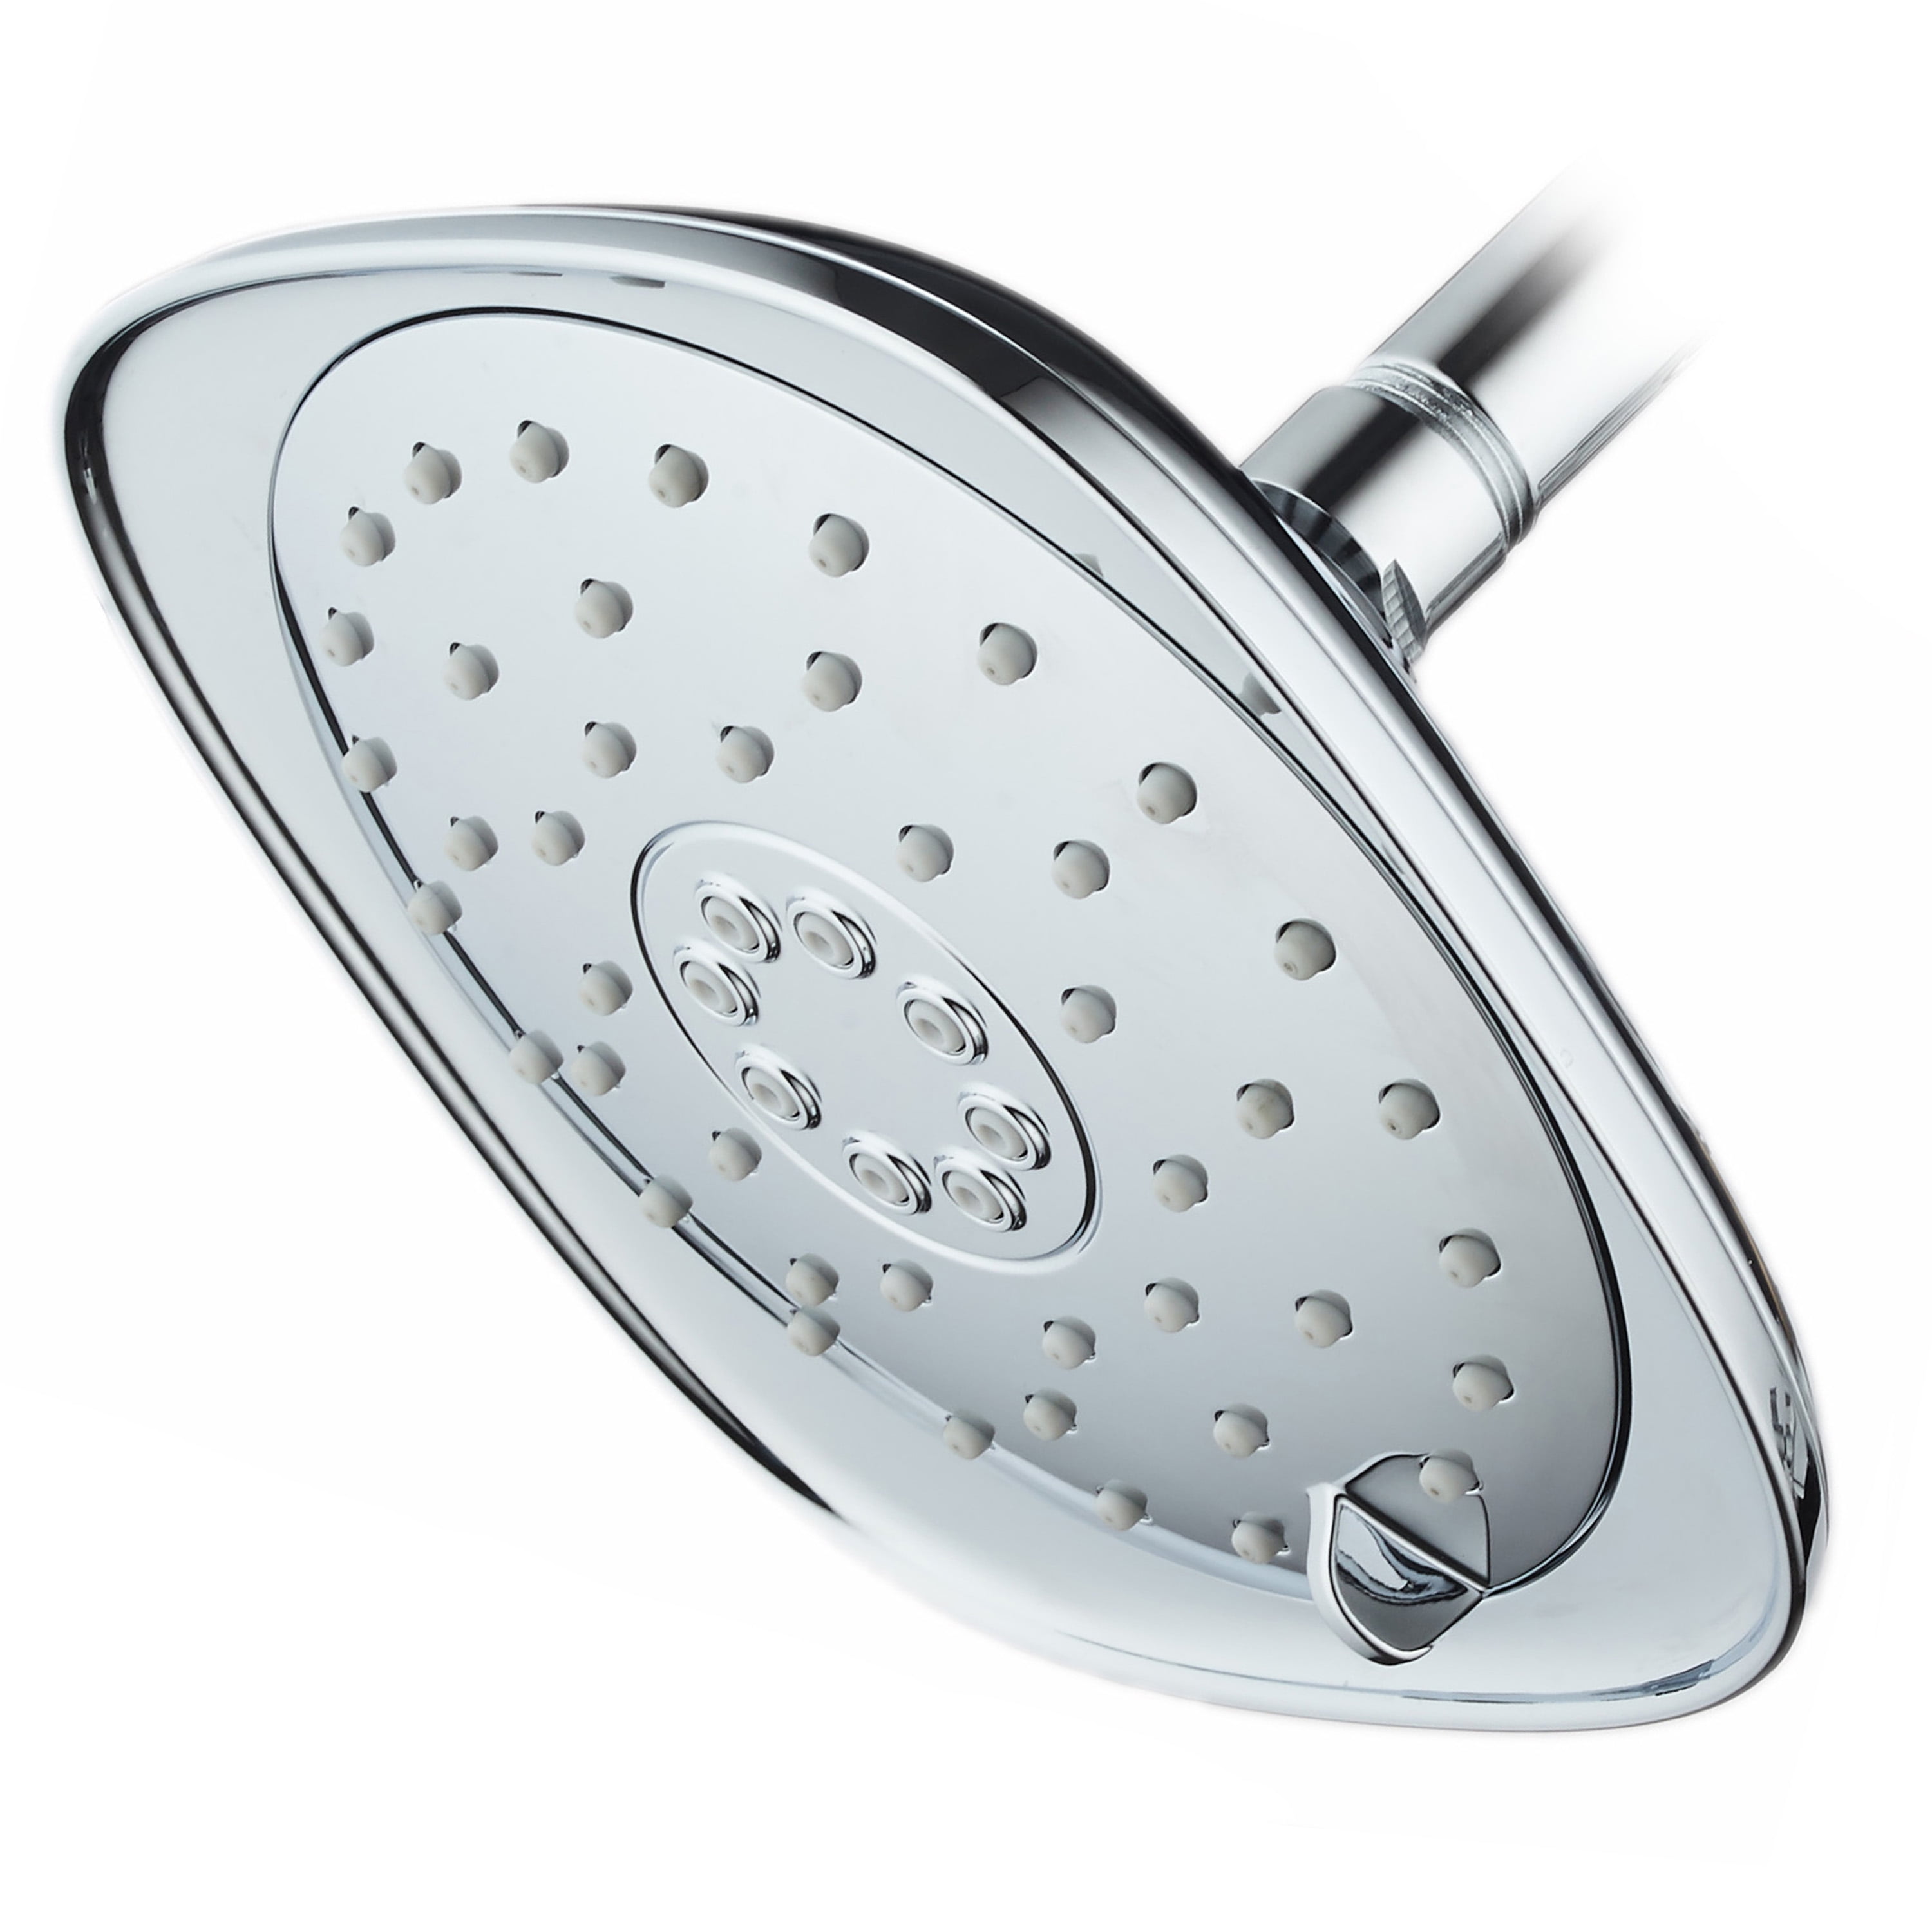 AquaDance Modern Sleek Design High-Pressure 5-Setting 7-Color LED Shower Head 